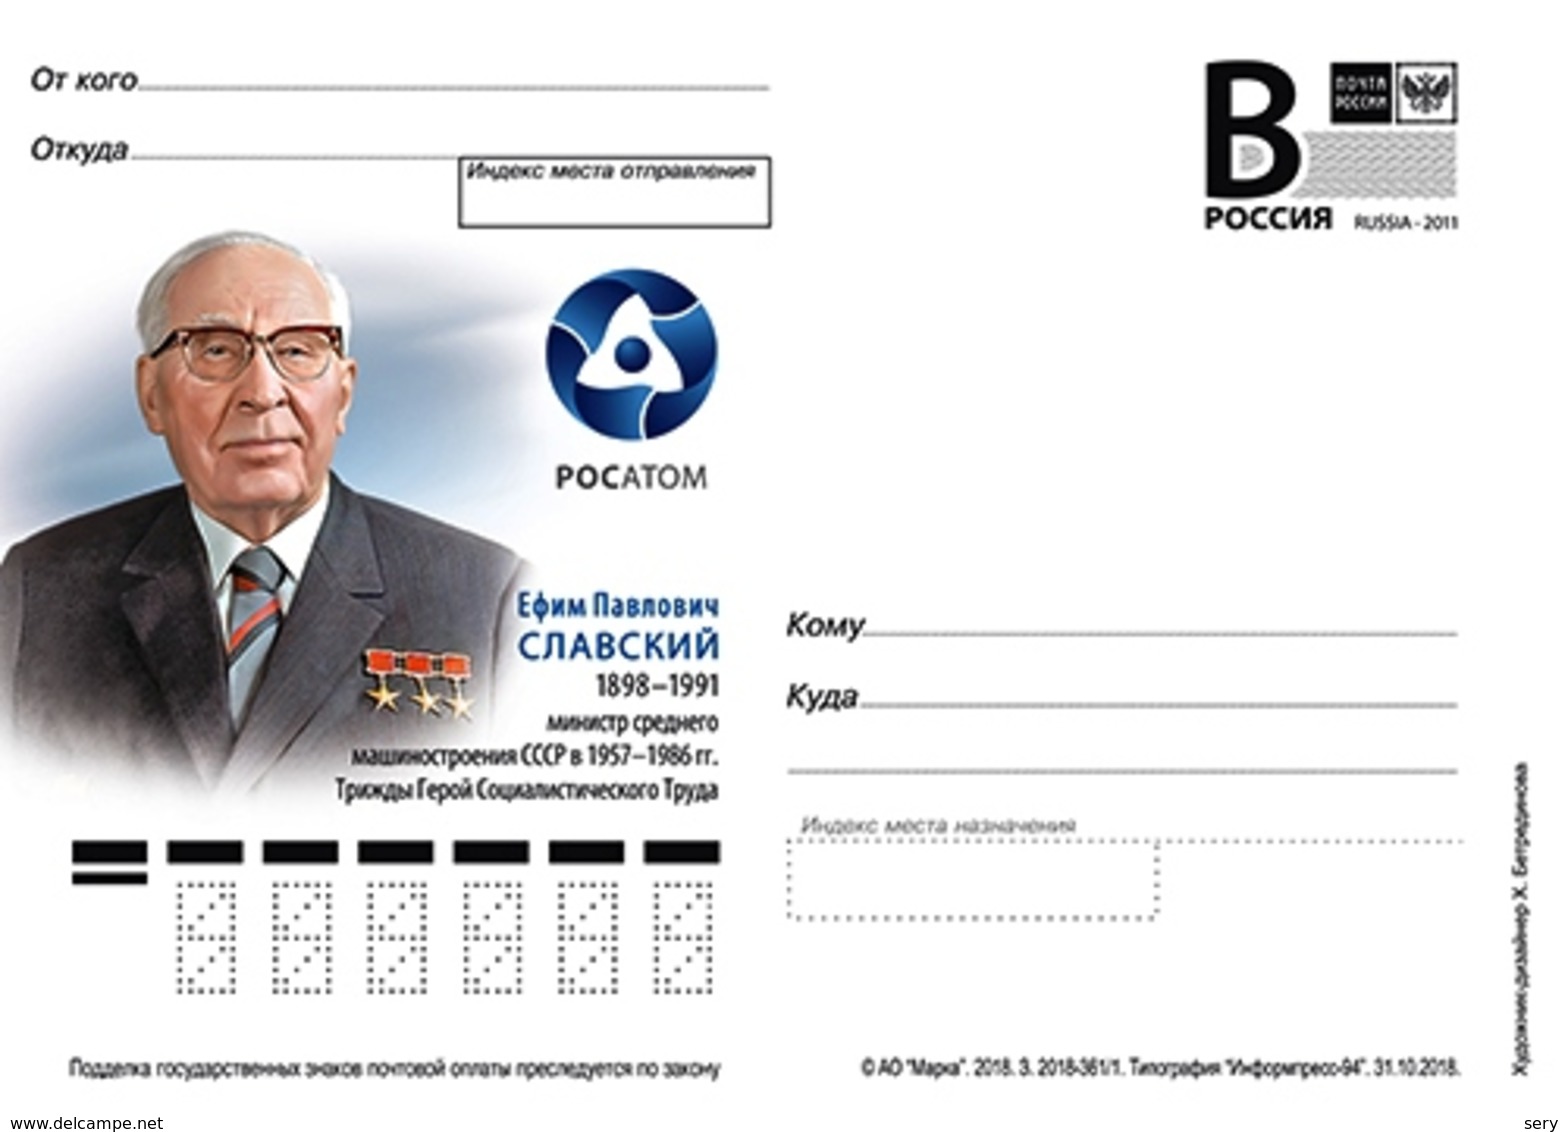 Russia 2018 Postal Stationery Card Efim Slavsky Head Of The Soviet Nuclear Industry In 1957-1986 - Atom